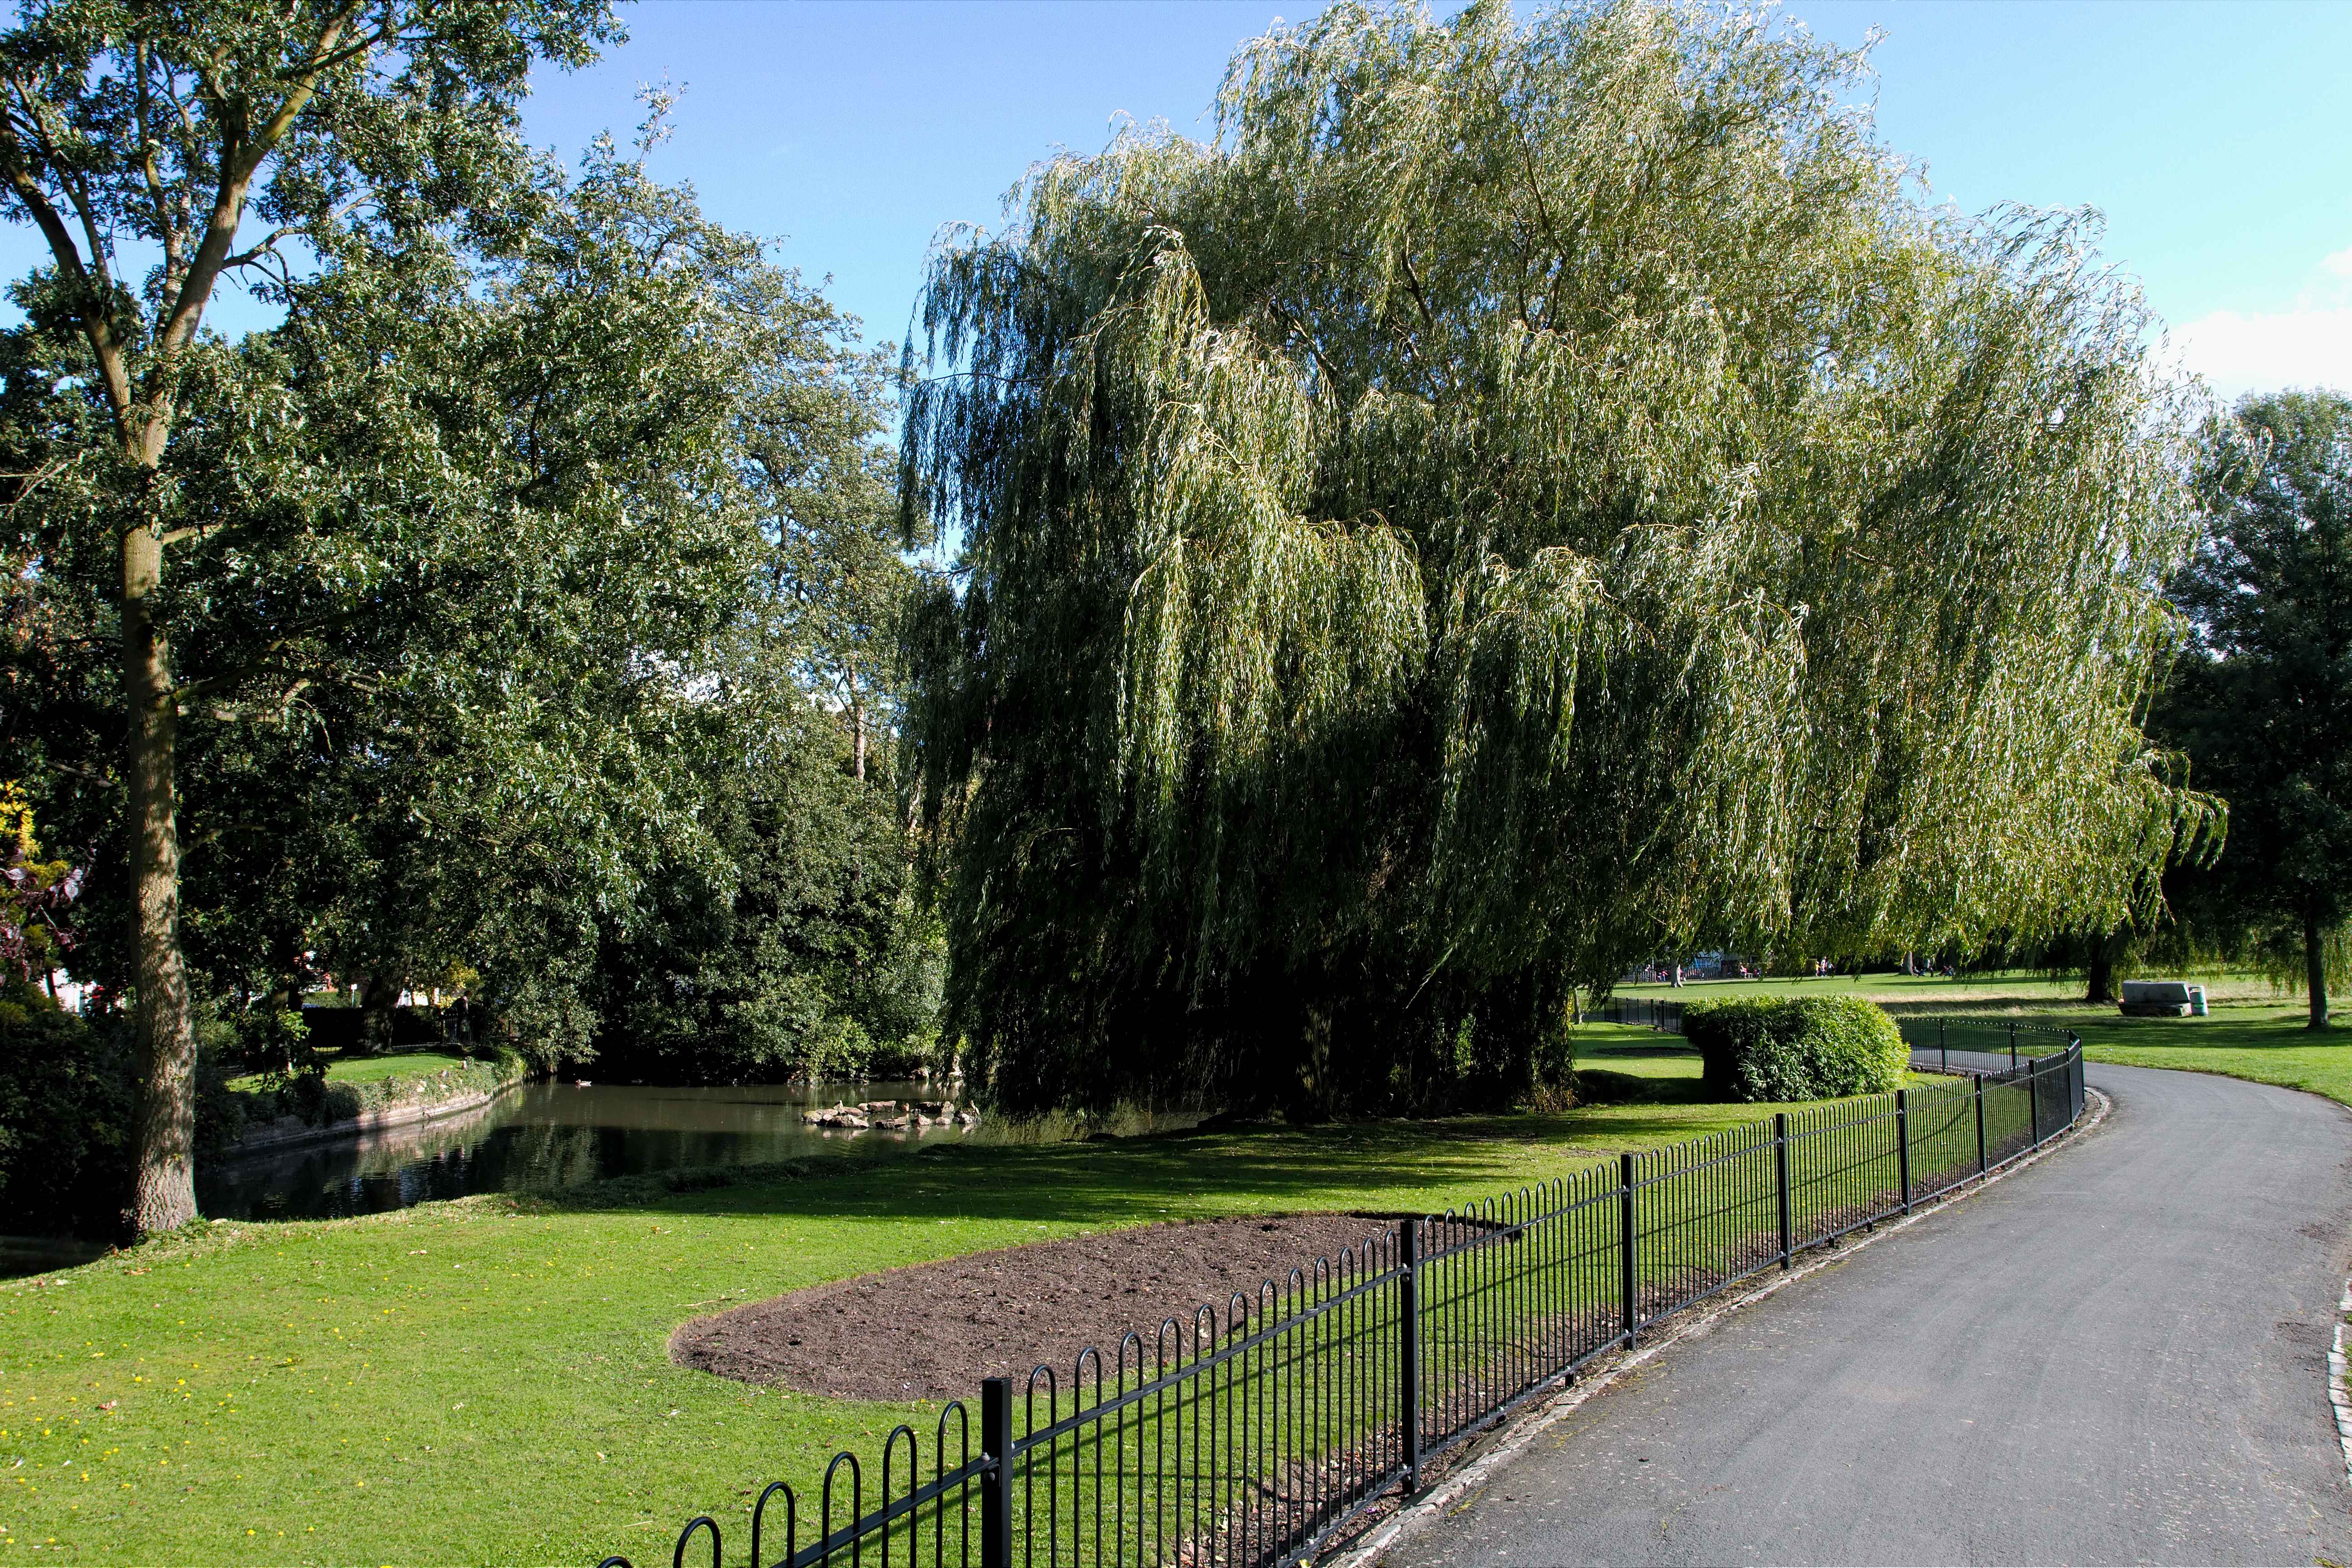 Manor Park pond